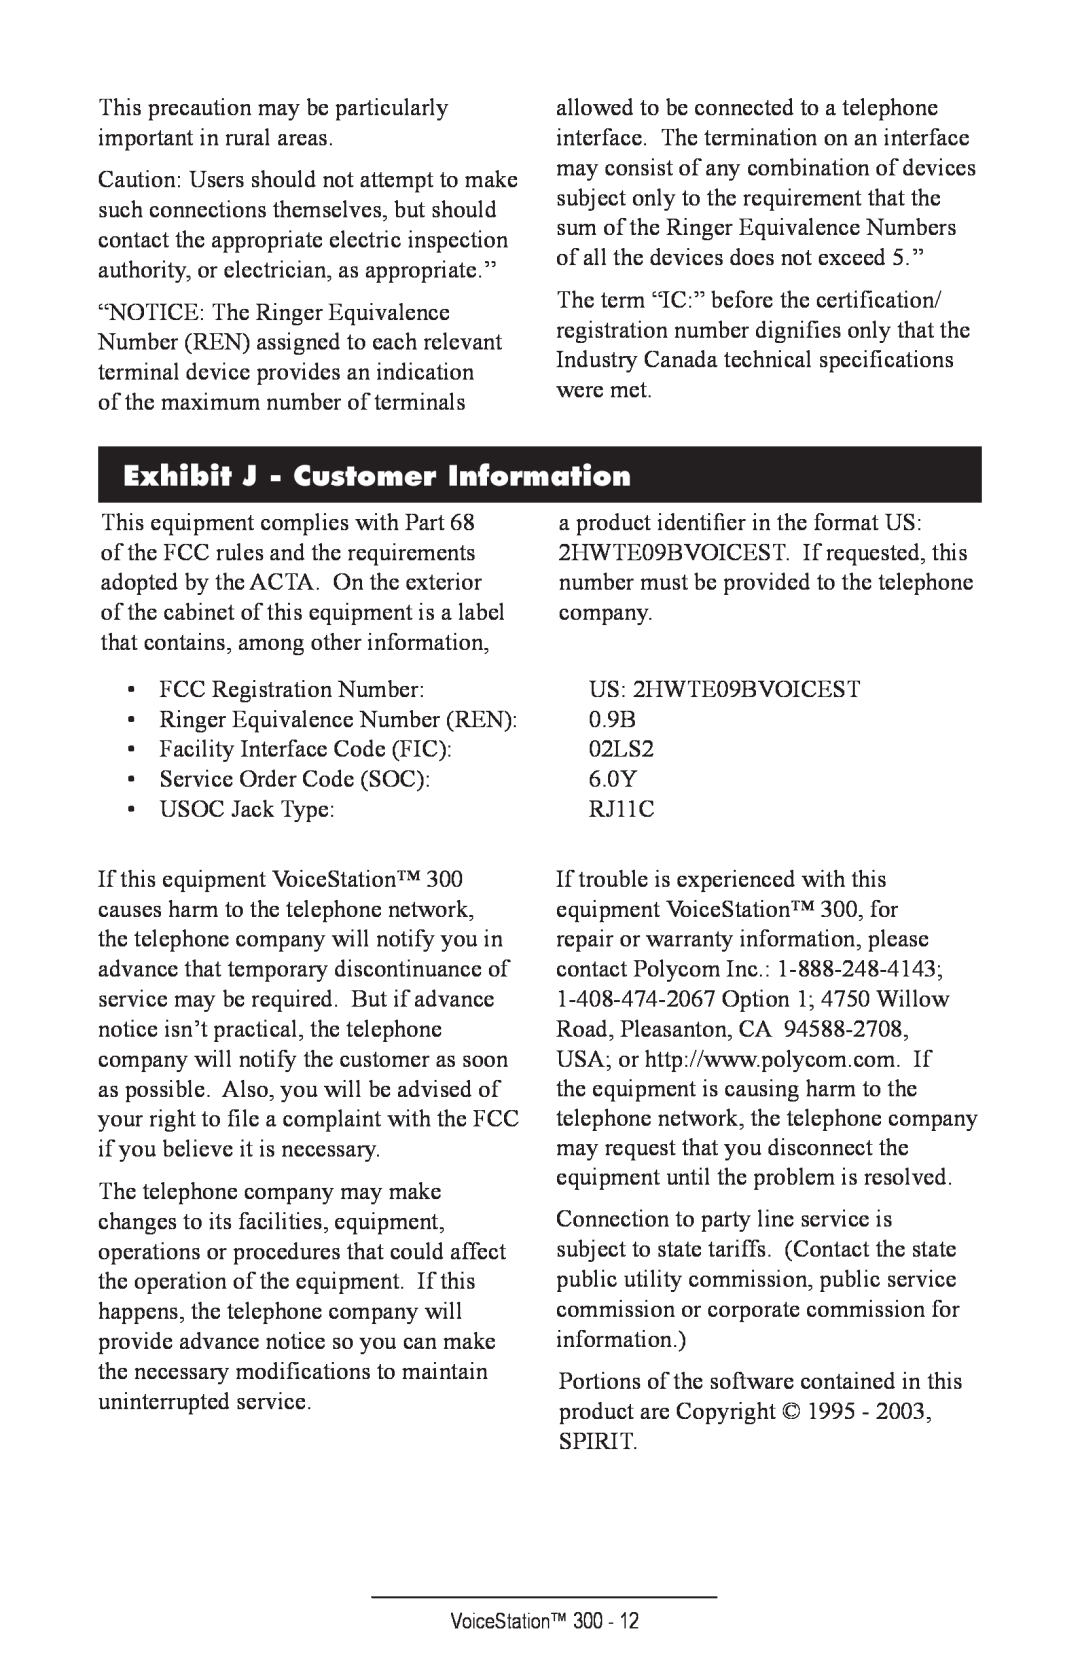 Polycom TM300 manual Exhibit J - Customer Information 